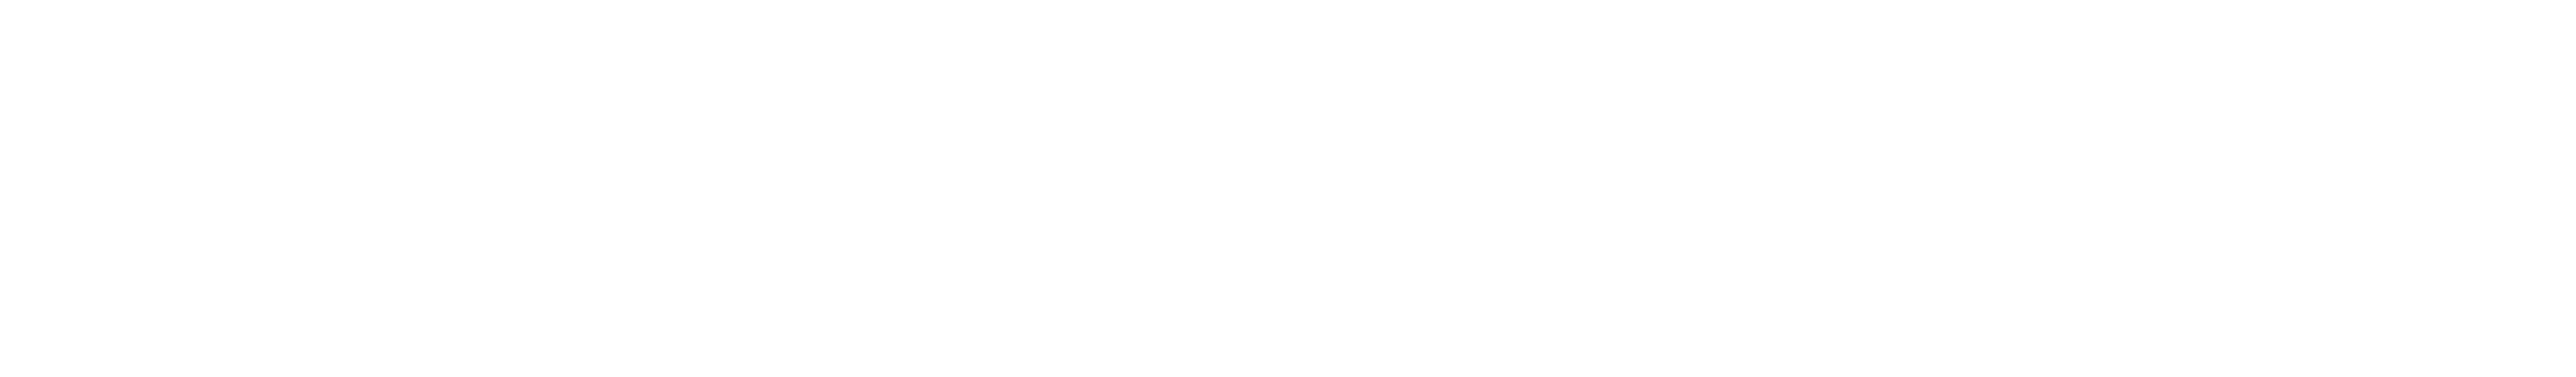 The village church logo.